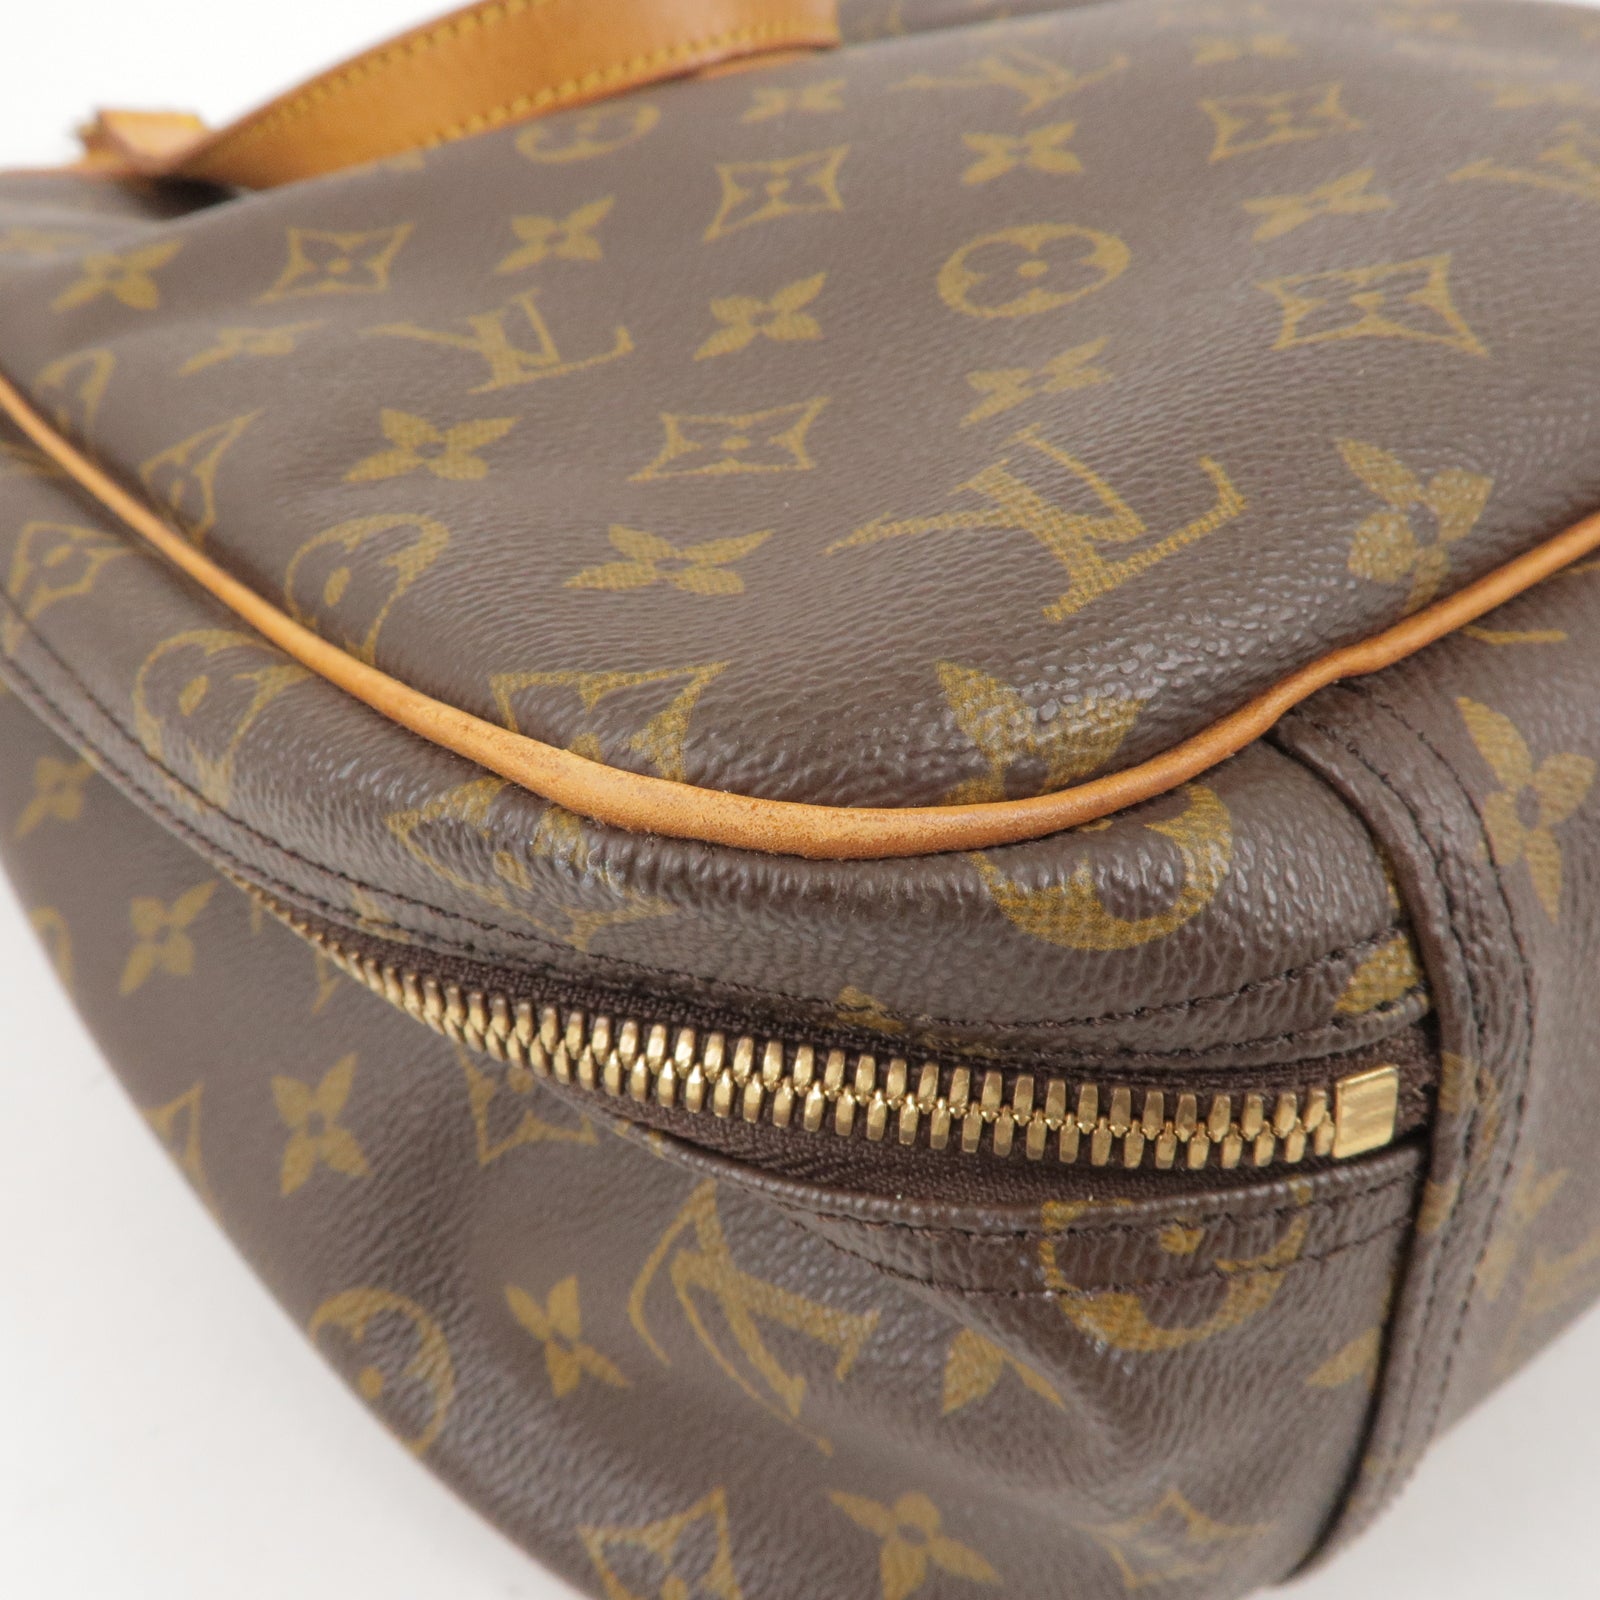 Louis Vuitton Monogram Excursion Handbag in Monogram Leather and